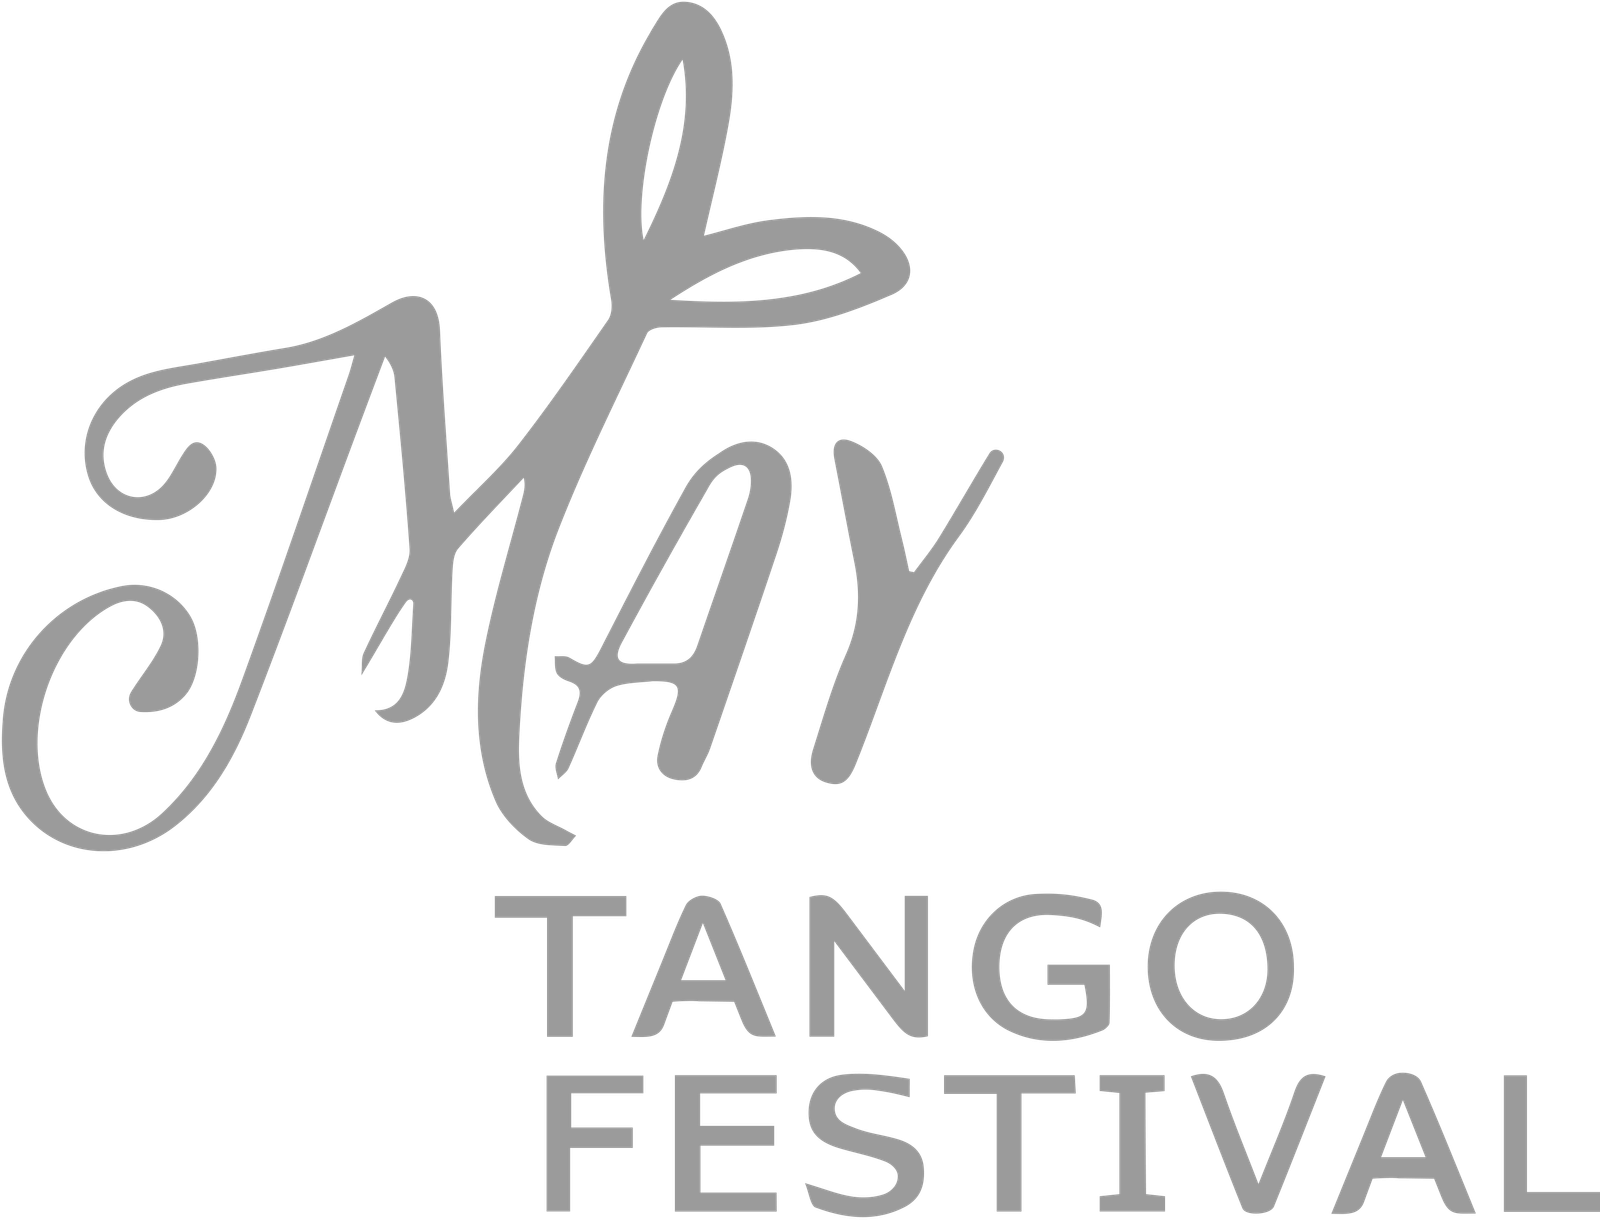 May Tango Festival